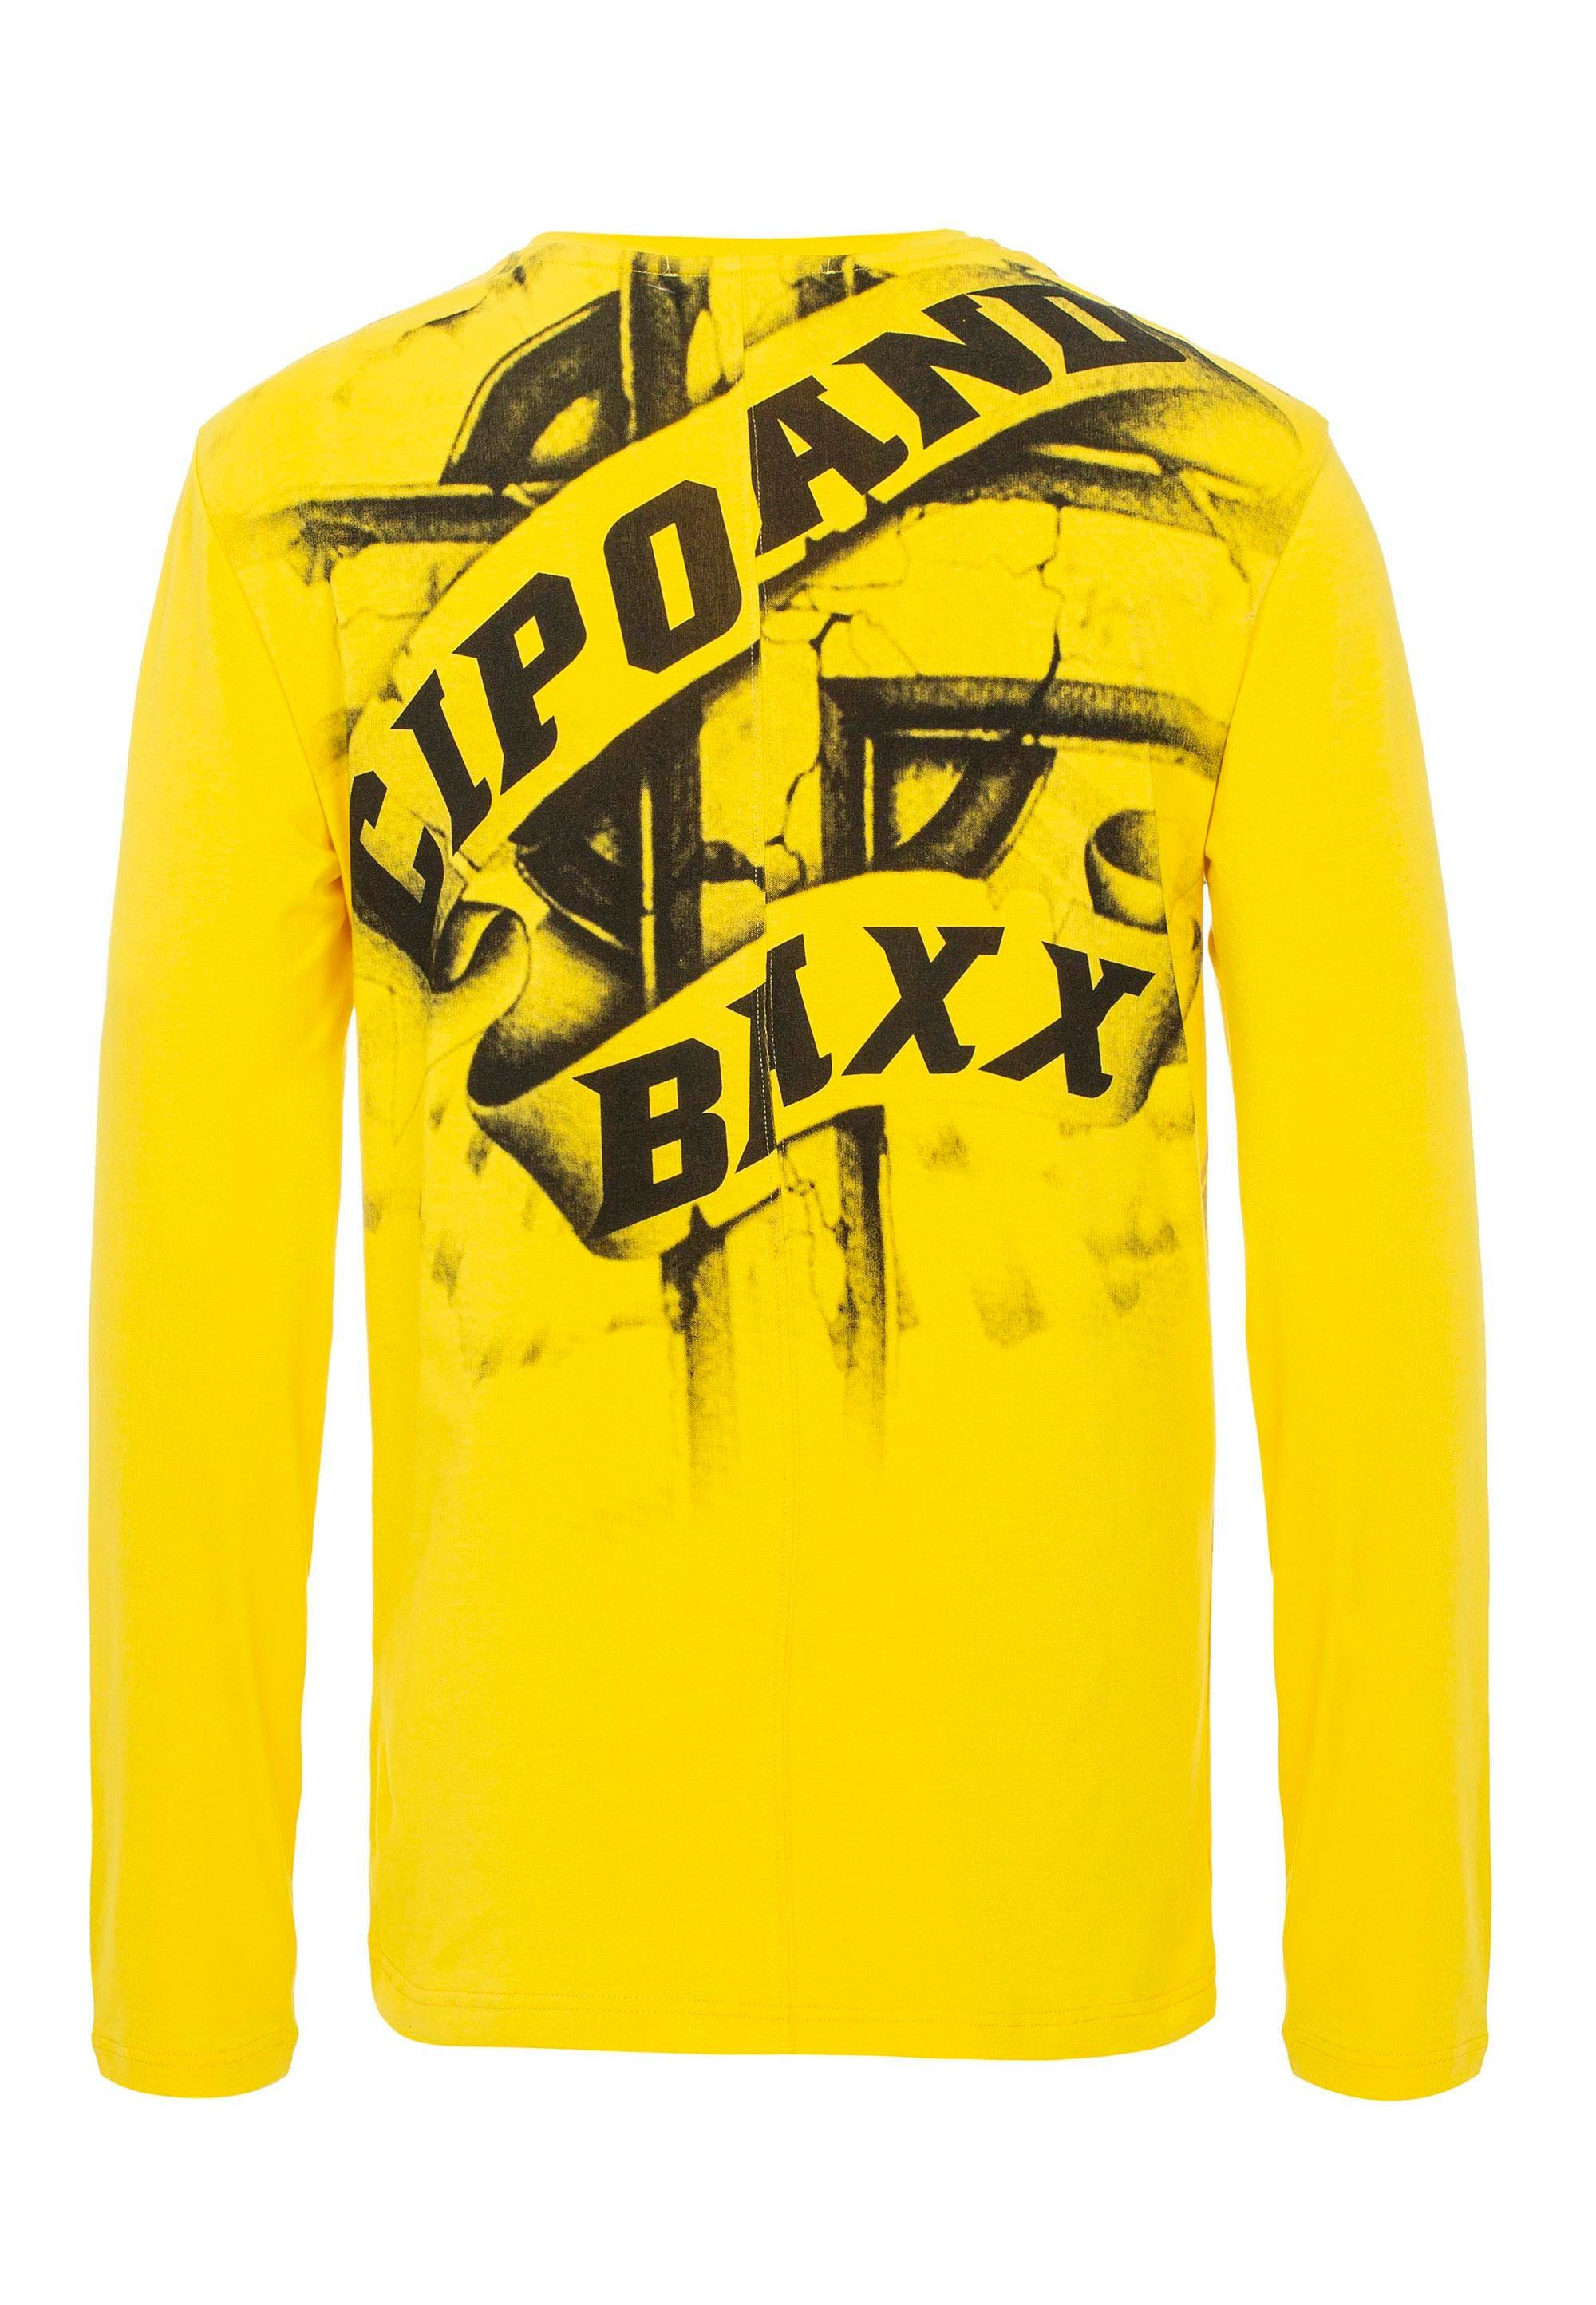 Cipo & Langarmshirt in Look Baxx gelb coolem